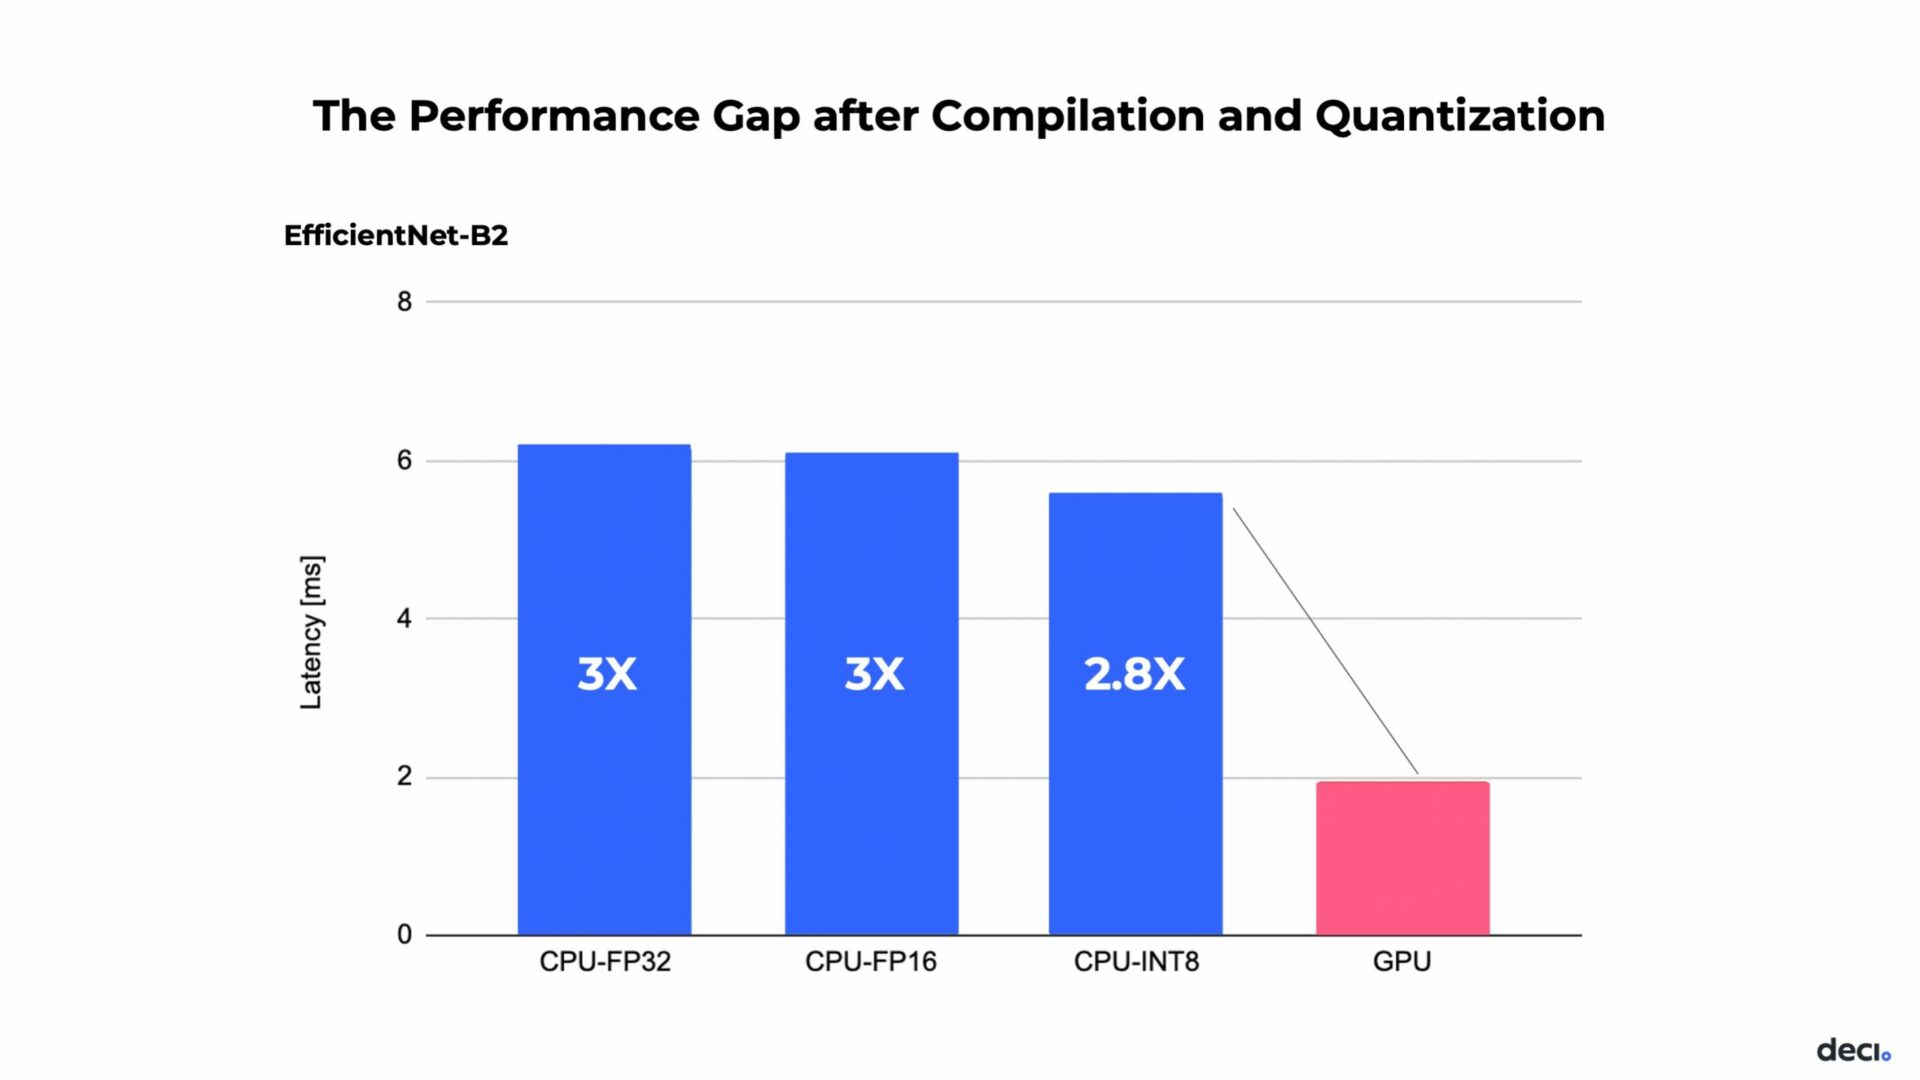 CPU vs GPU performance gap after compilation and quantization